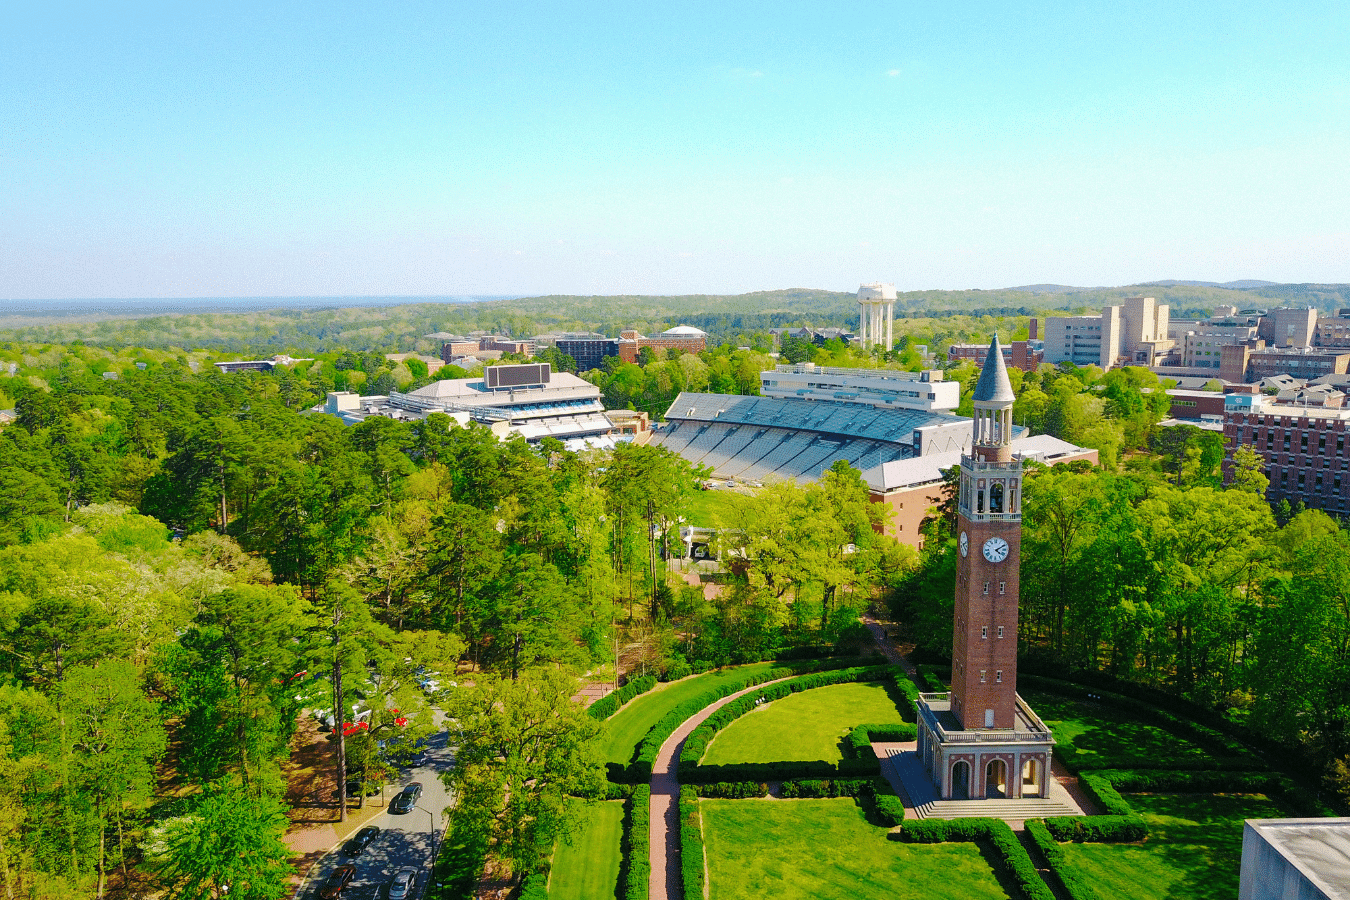 UNC campus in Chapel Hill near Apex, North Carolina